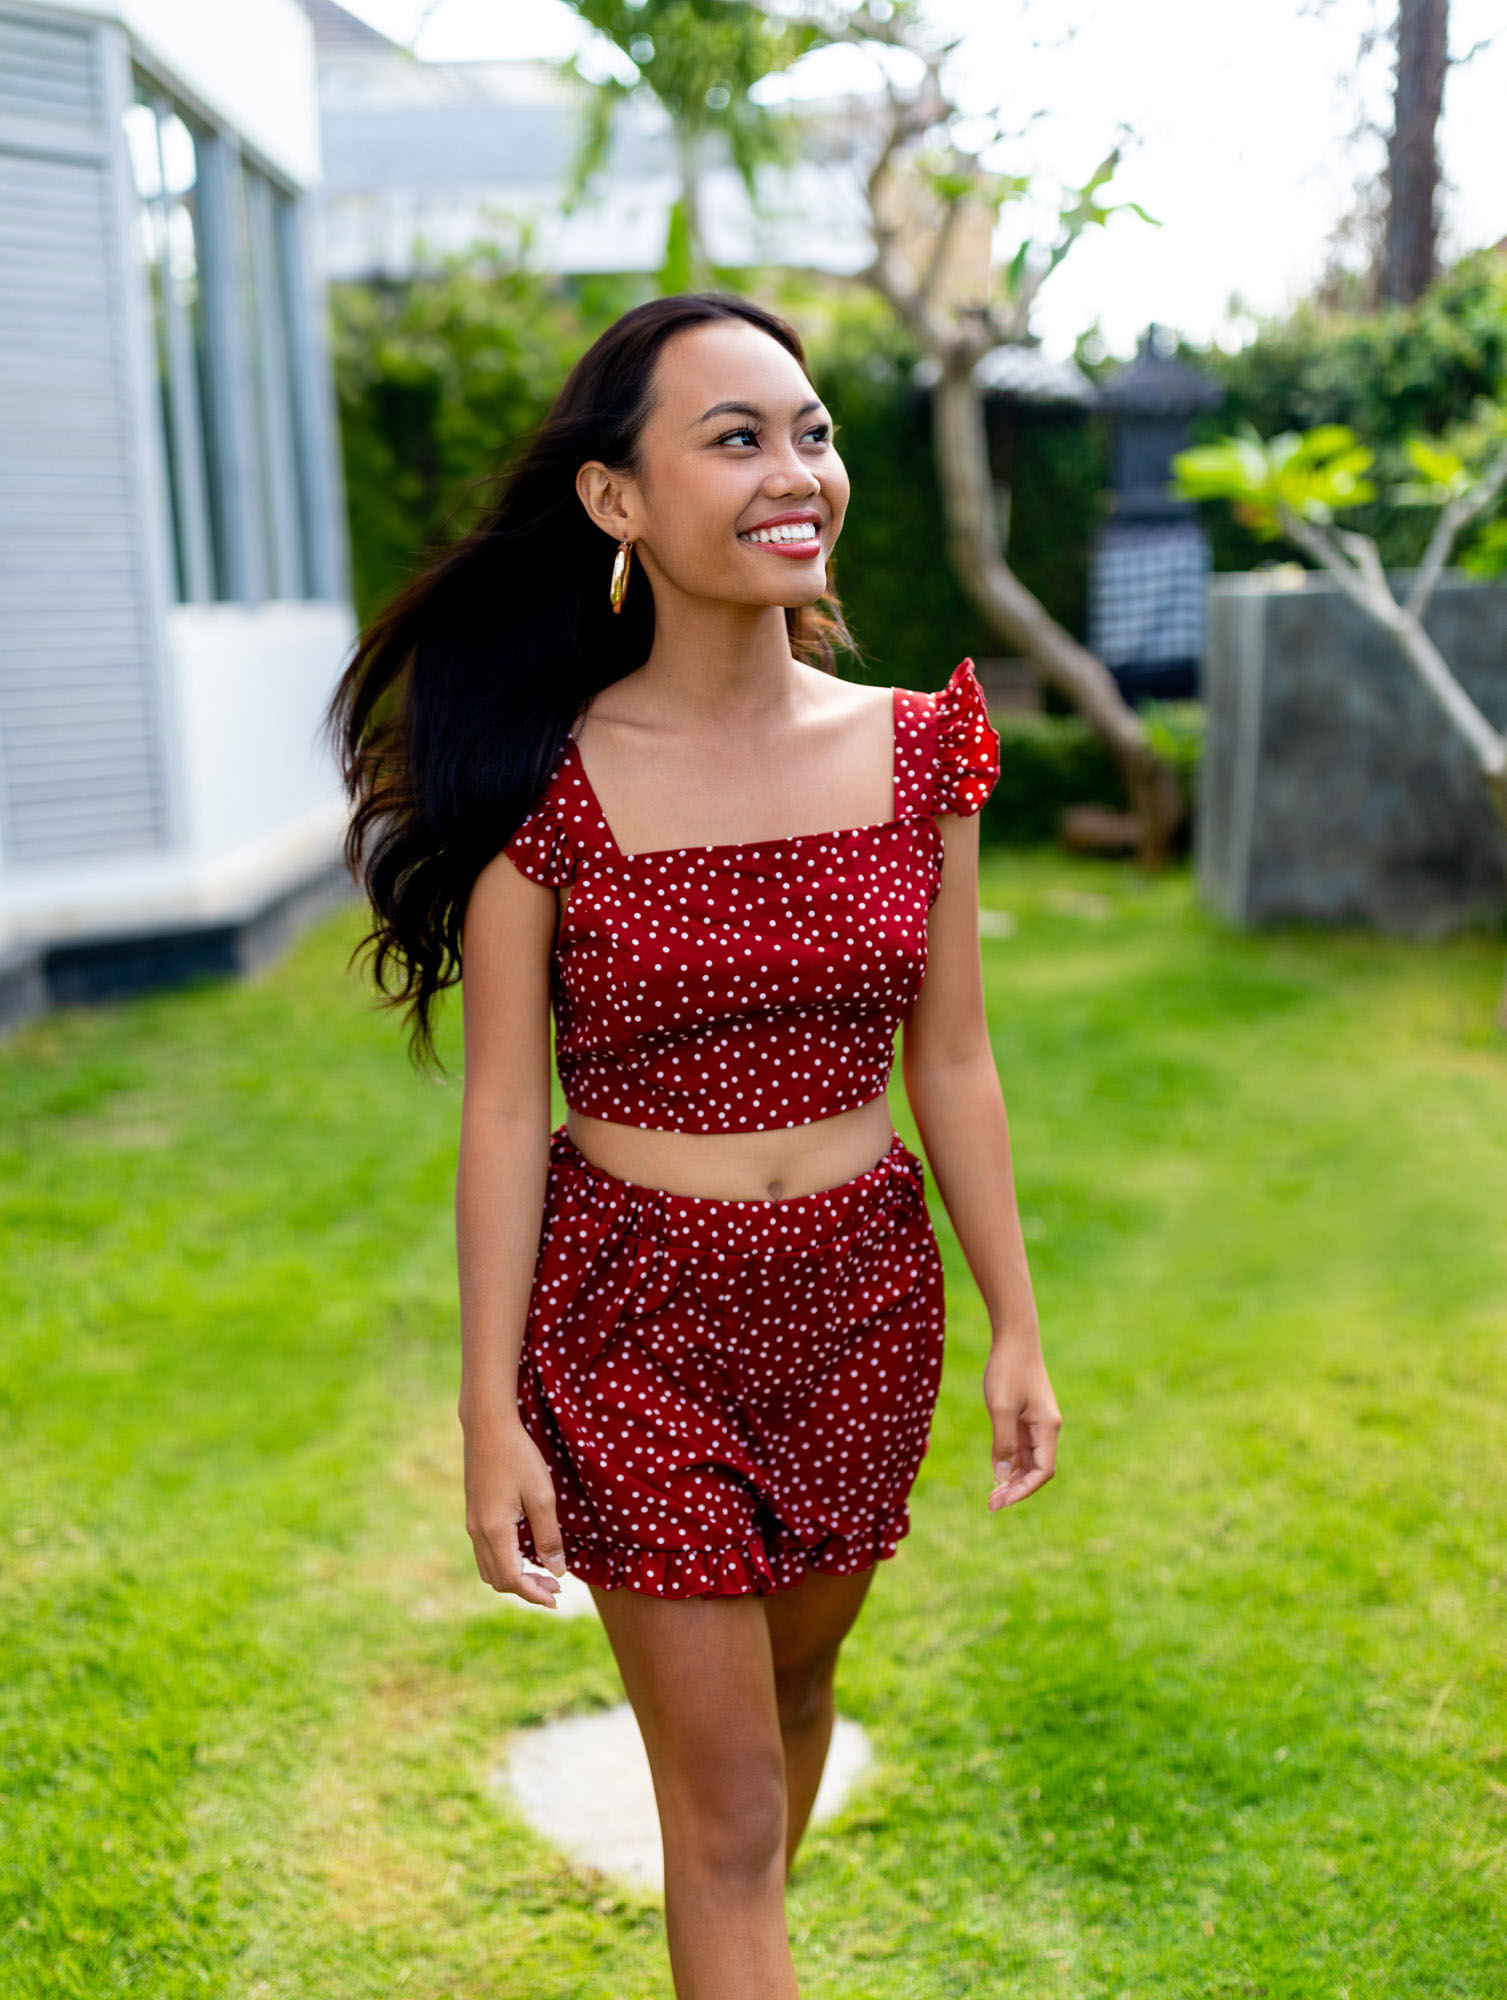 Woman walks in garden of luxury villa in Bali wearing red | Lifestyle Photography | Swimwear Photography | Asian Bali Model | High Key Photography | Fashion Photography